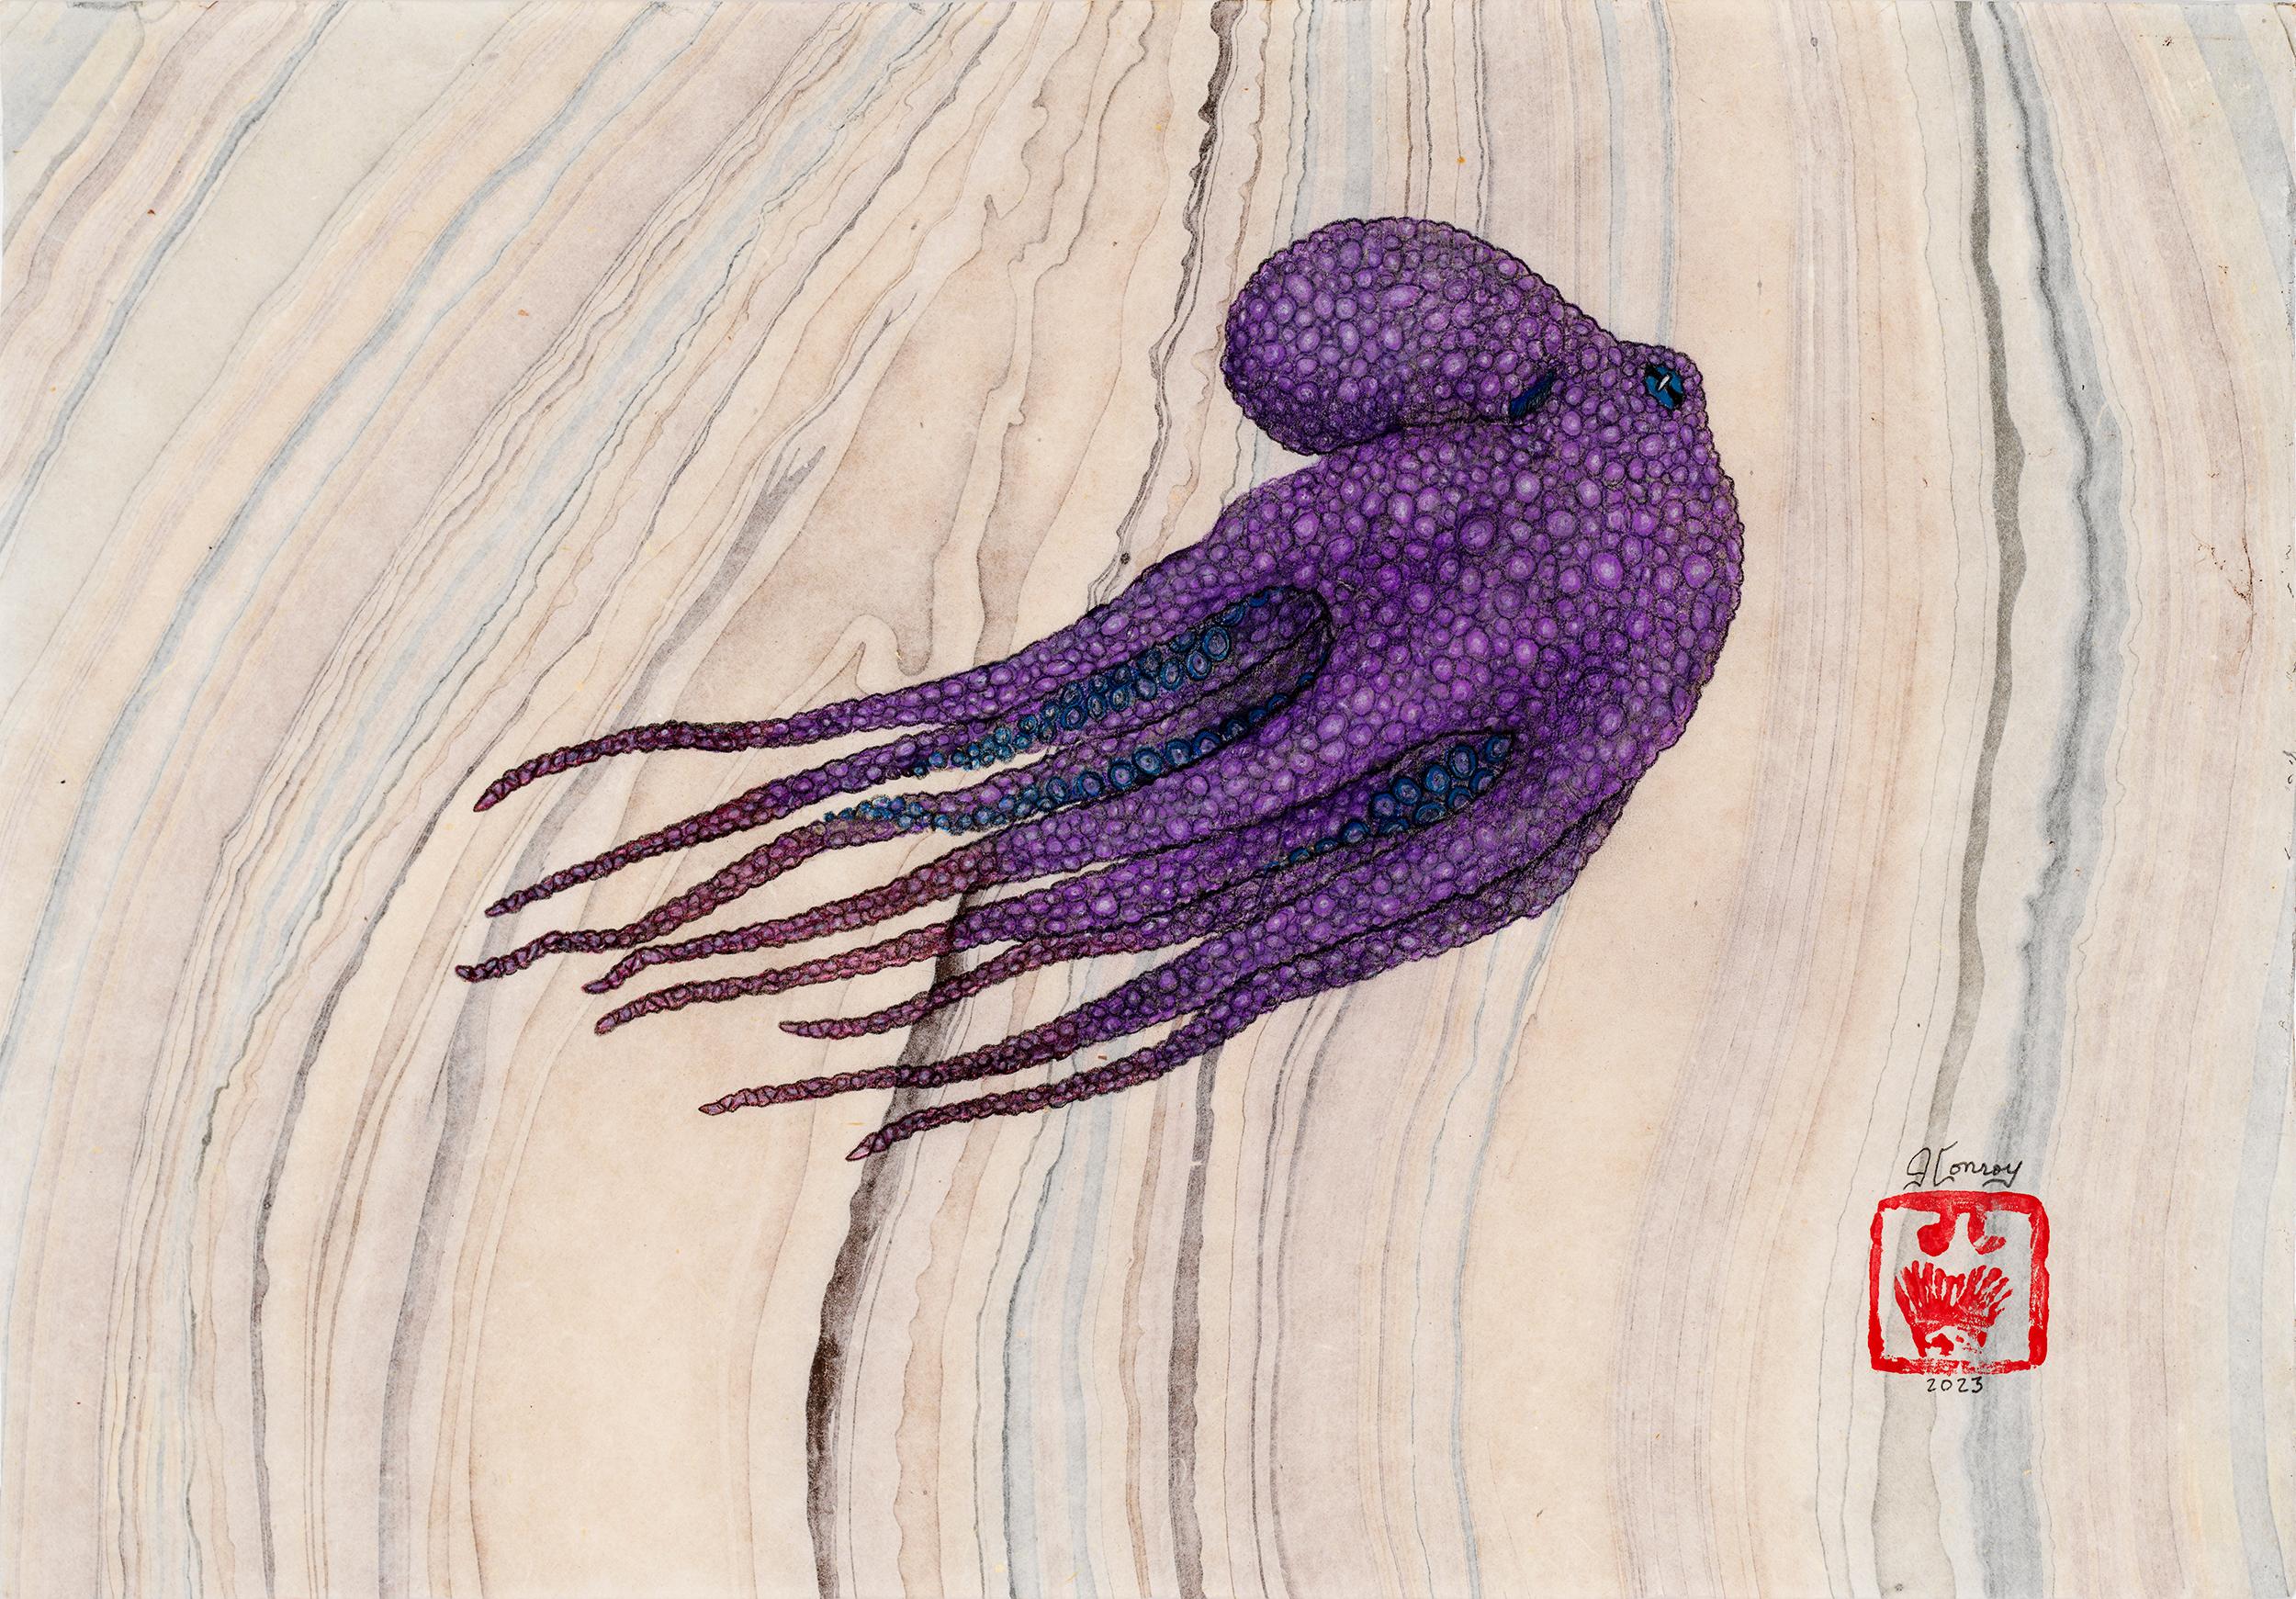 Jeff Conroy Animal Painting - Purple Nurple - Gyotaku Style Sumi Ink Painting of a Purple-Colored Octopus 